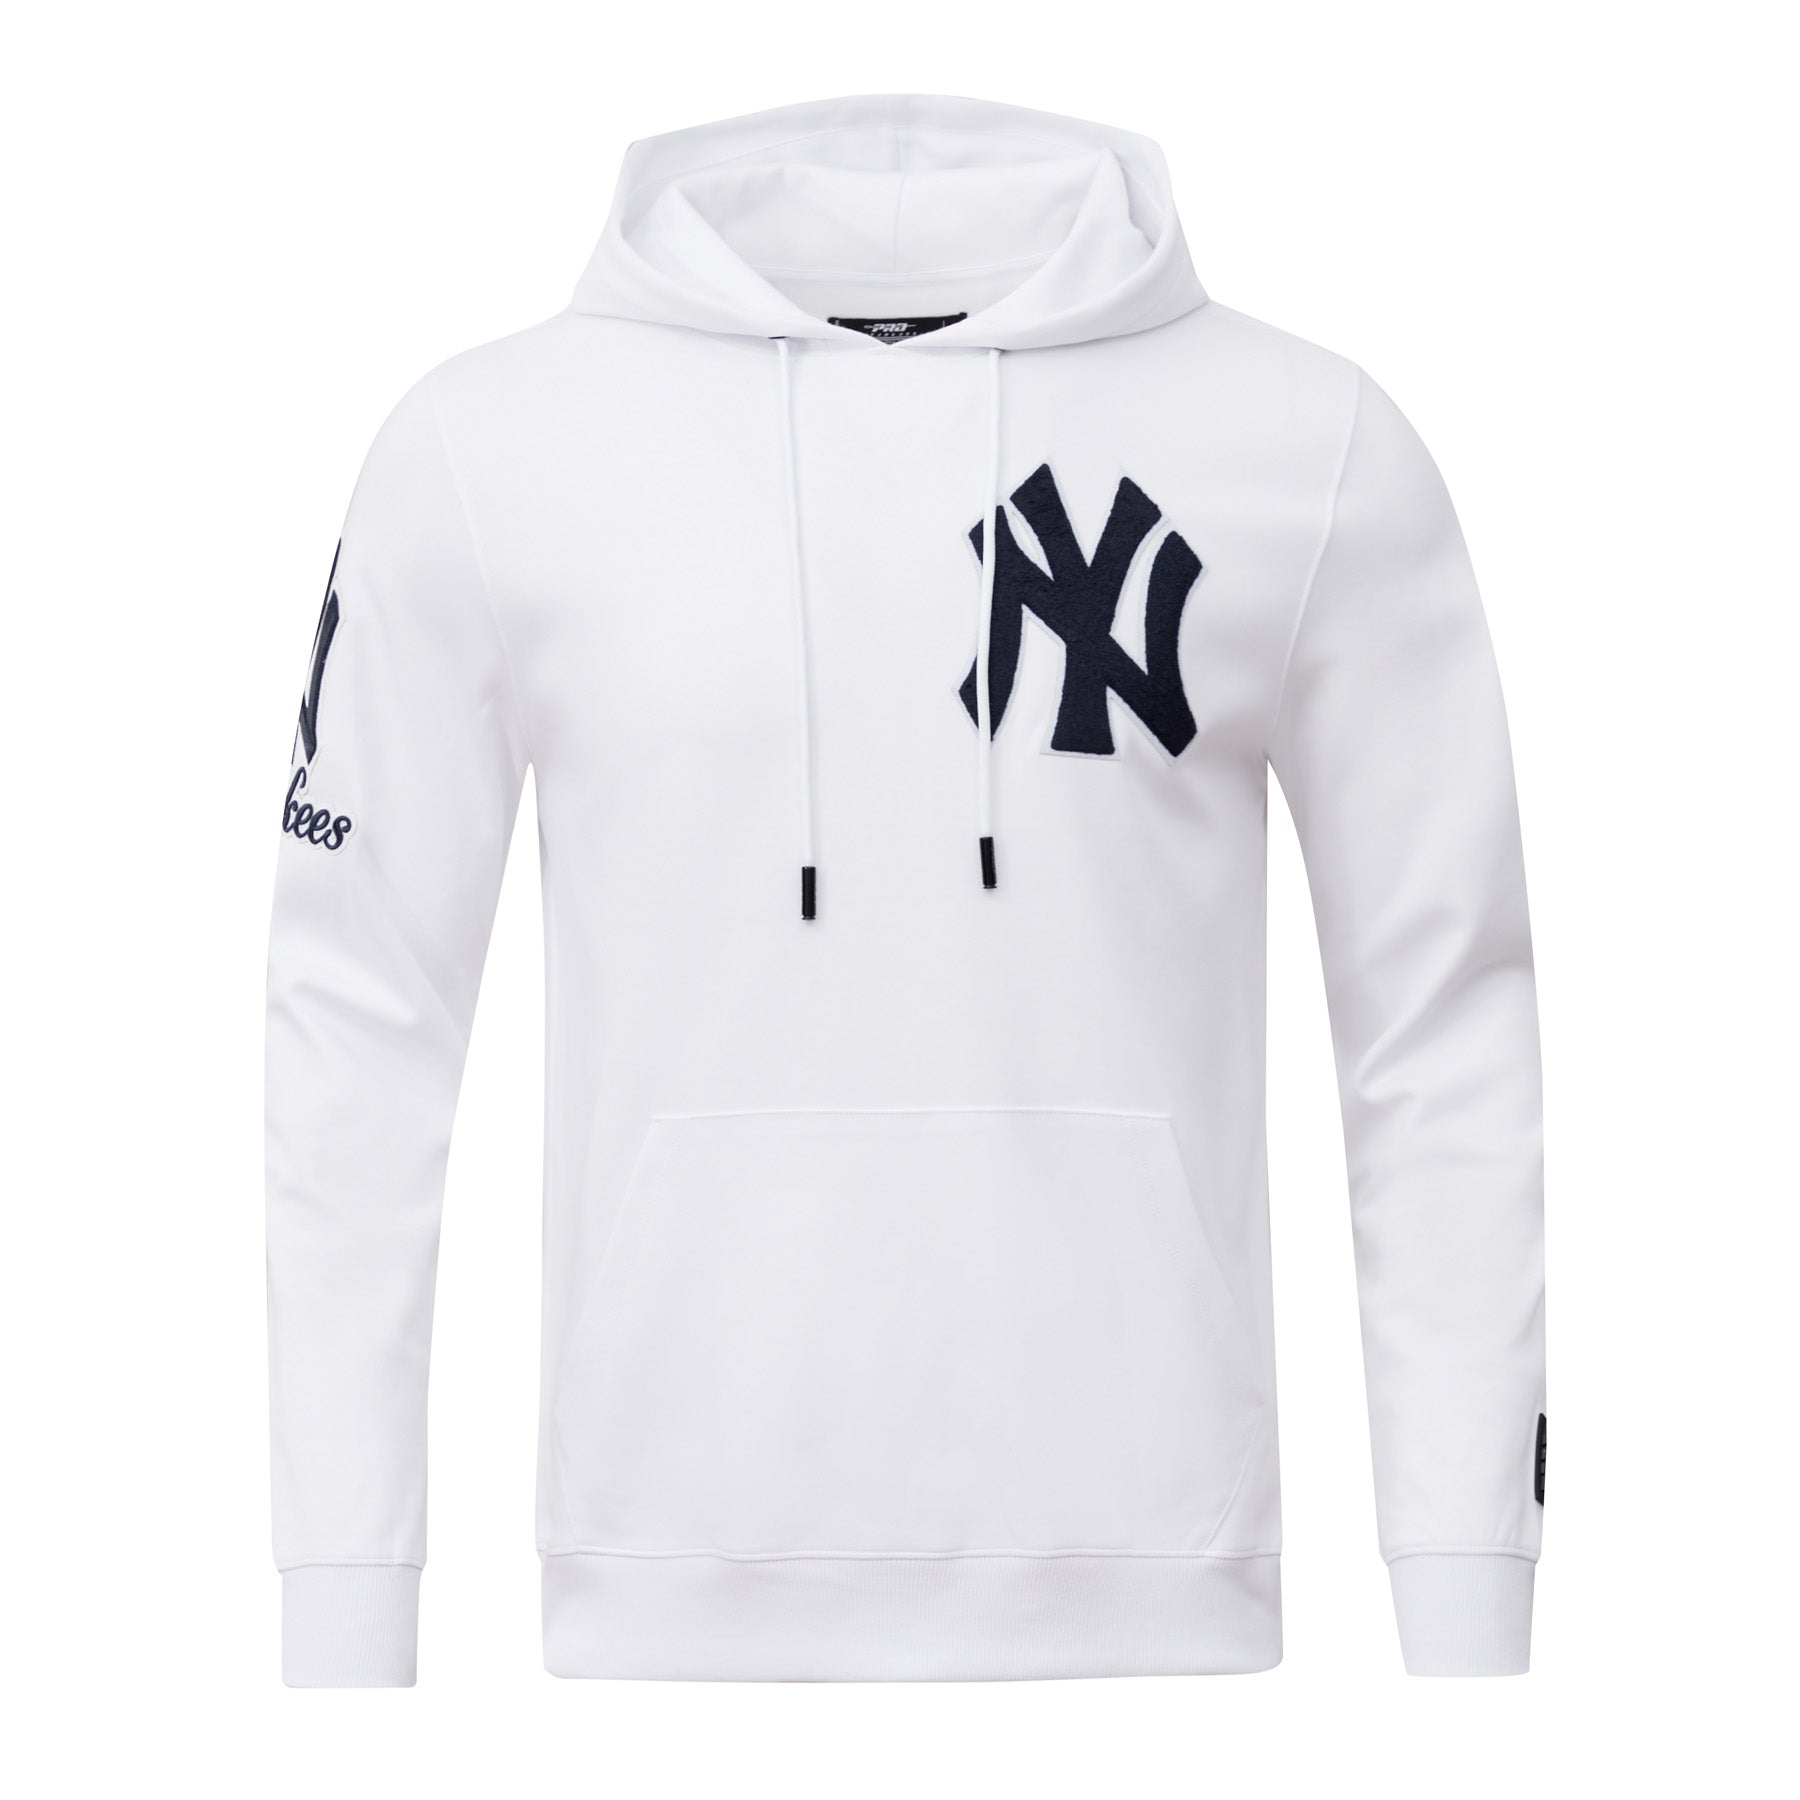 New York Yankees Hoodies, New York Yankees Sweatshirts